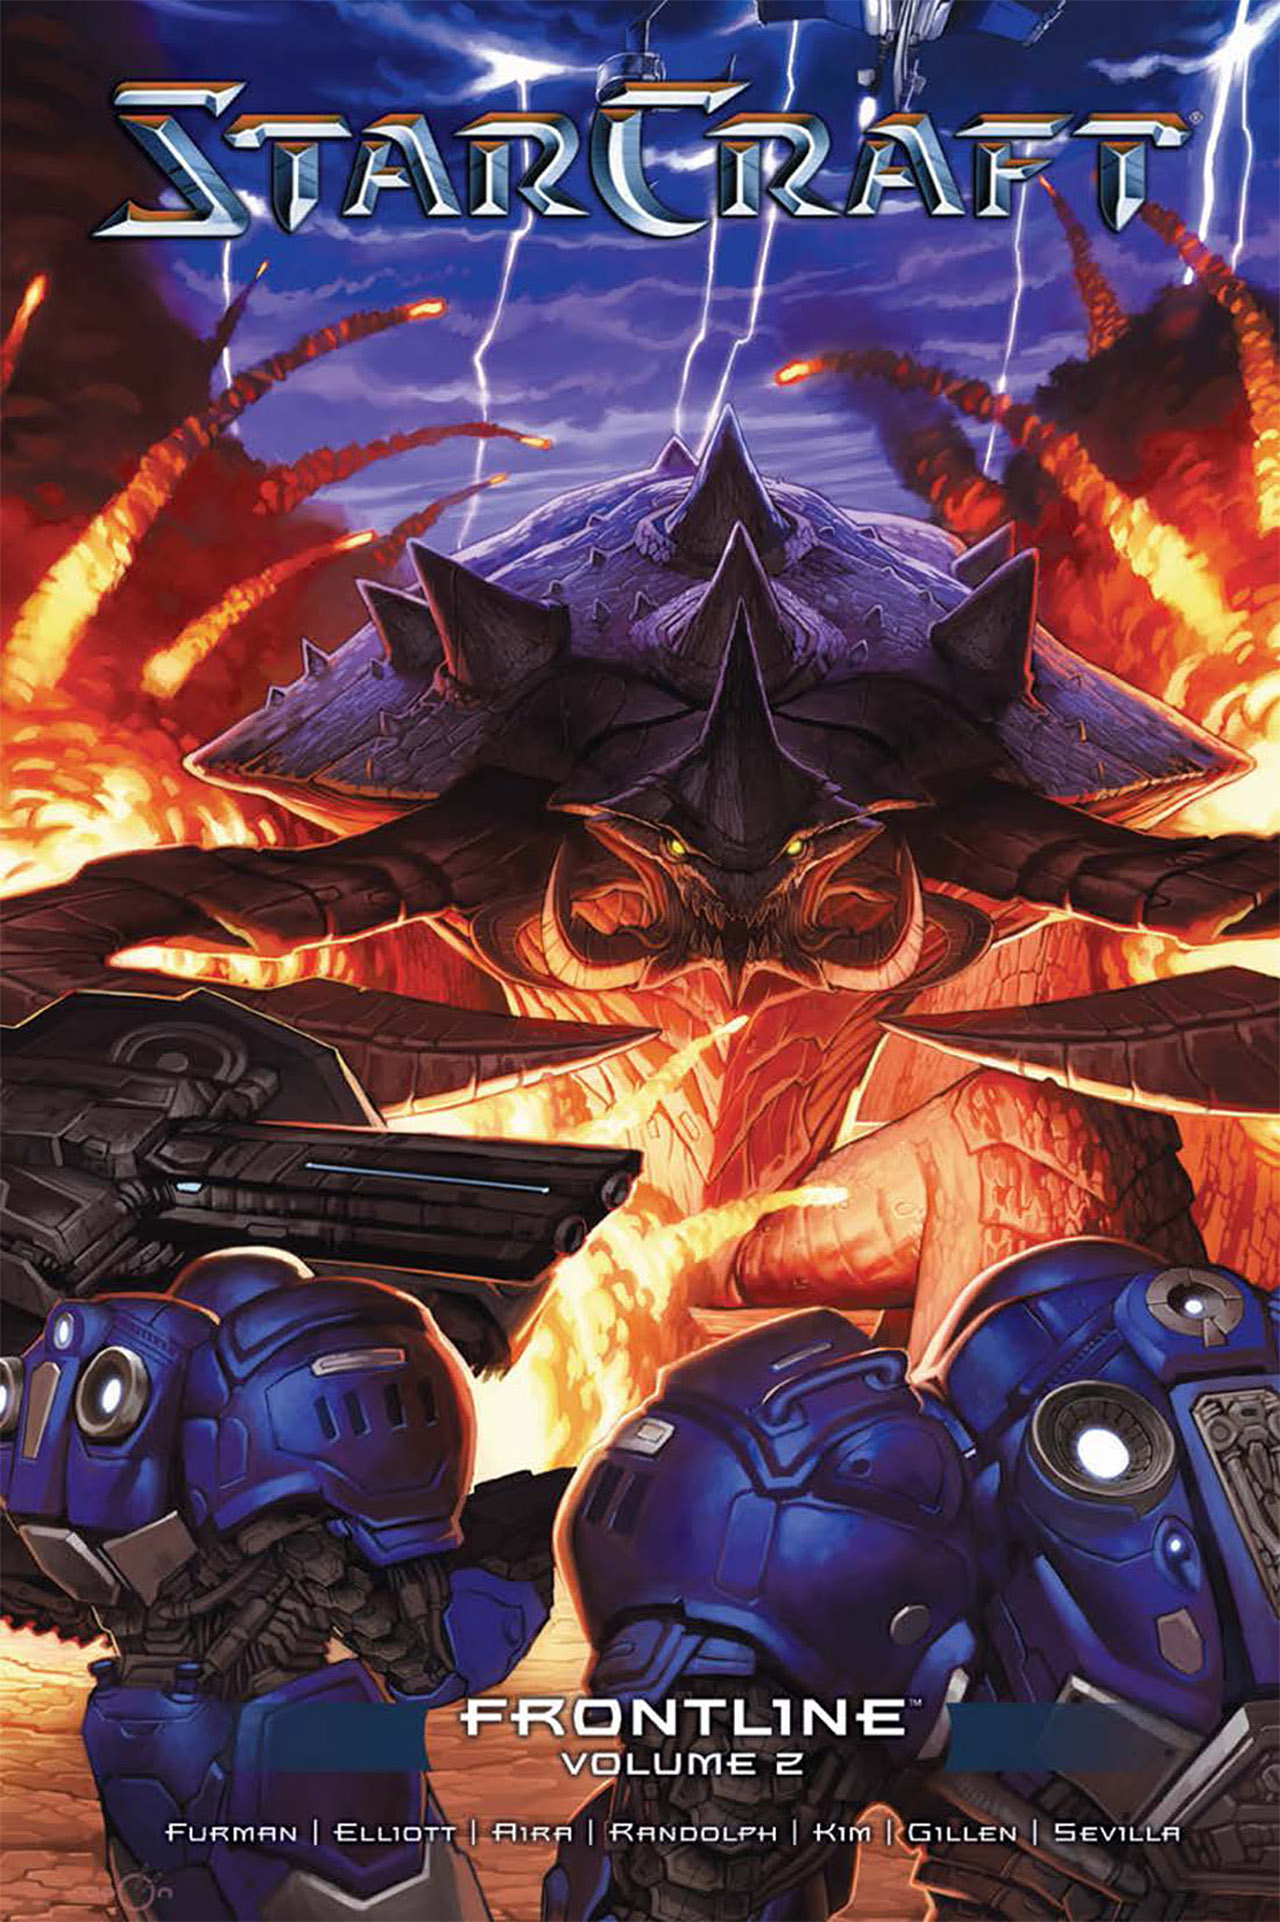 StarCraft Frontline Volume 2